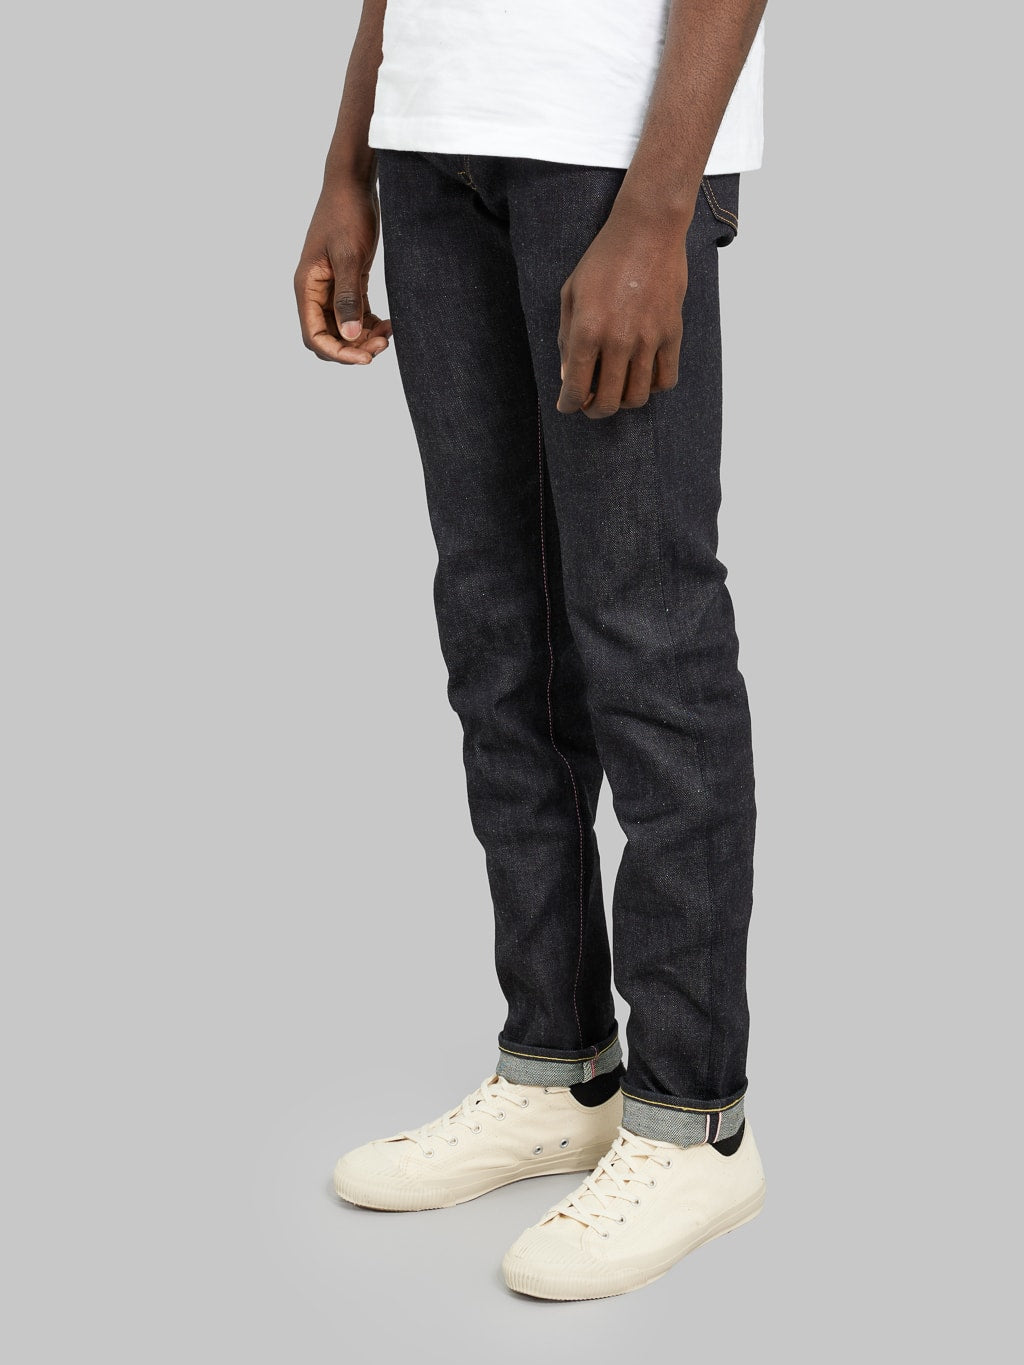 momotaro jeans 0306 12 12oz selvedge denim tight tapered side fit